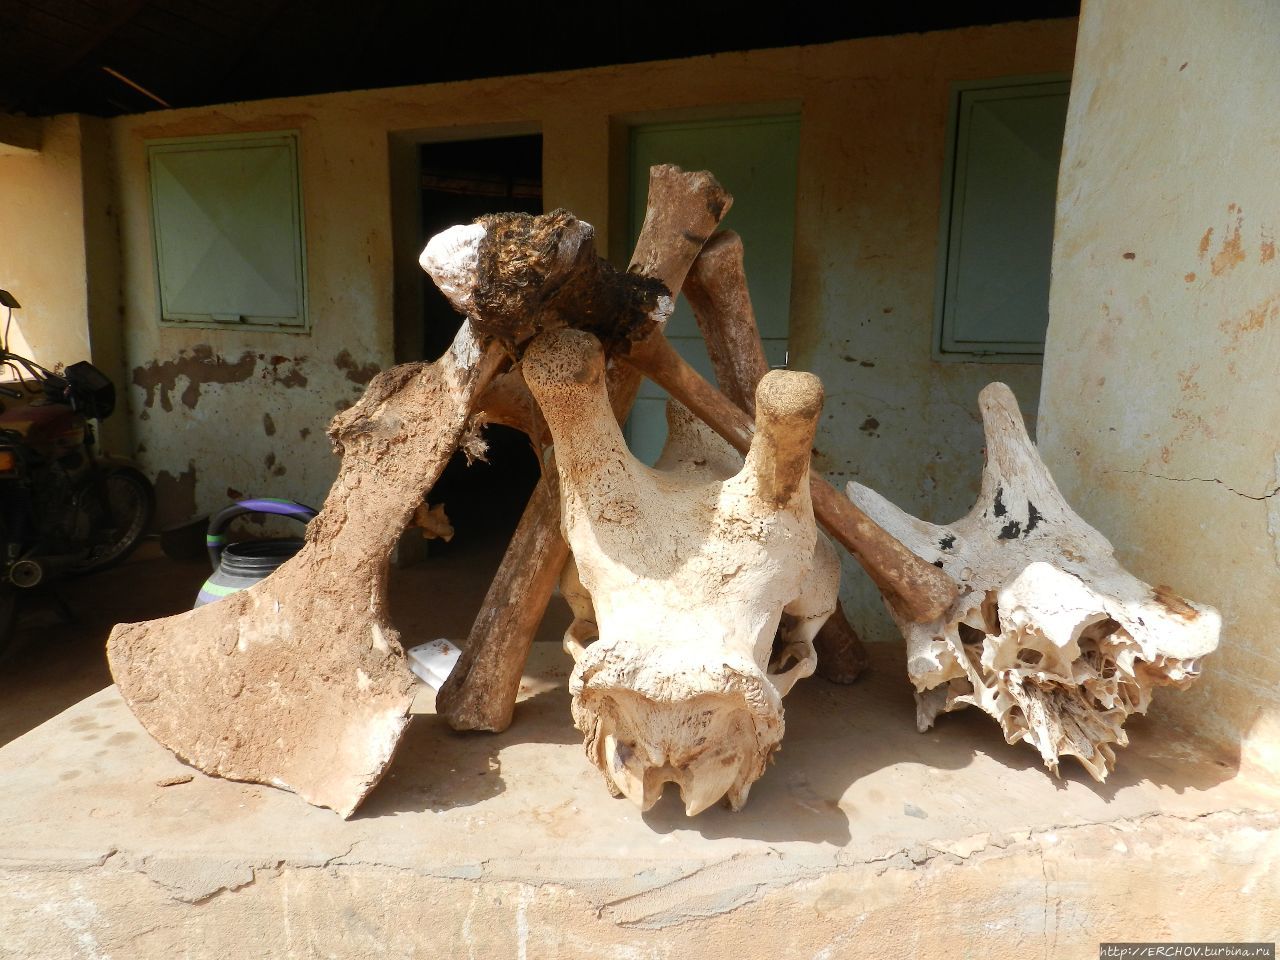 Нигер. Ч — 27. Султан Доссо. Заповедник жирафов. Ниамей Доссо, Нигер